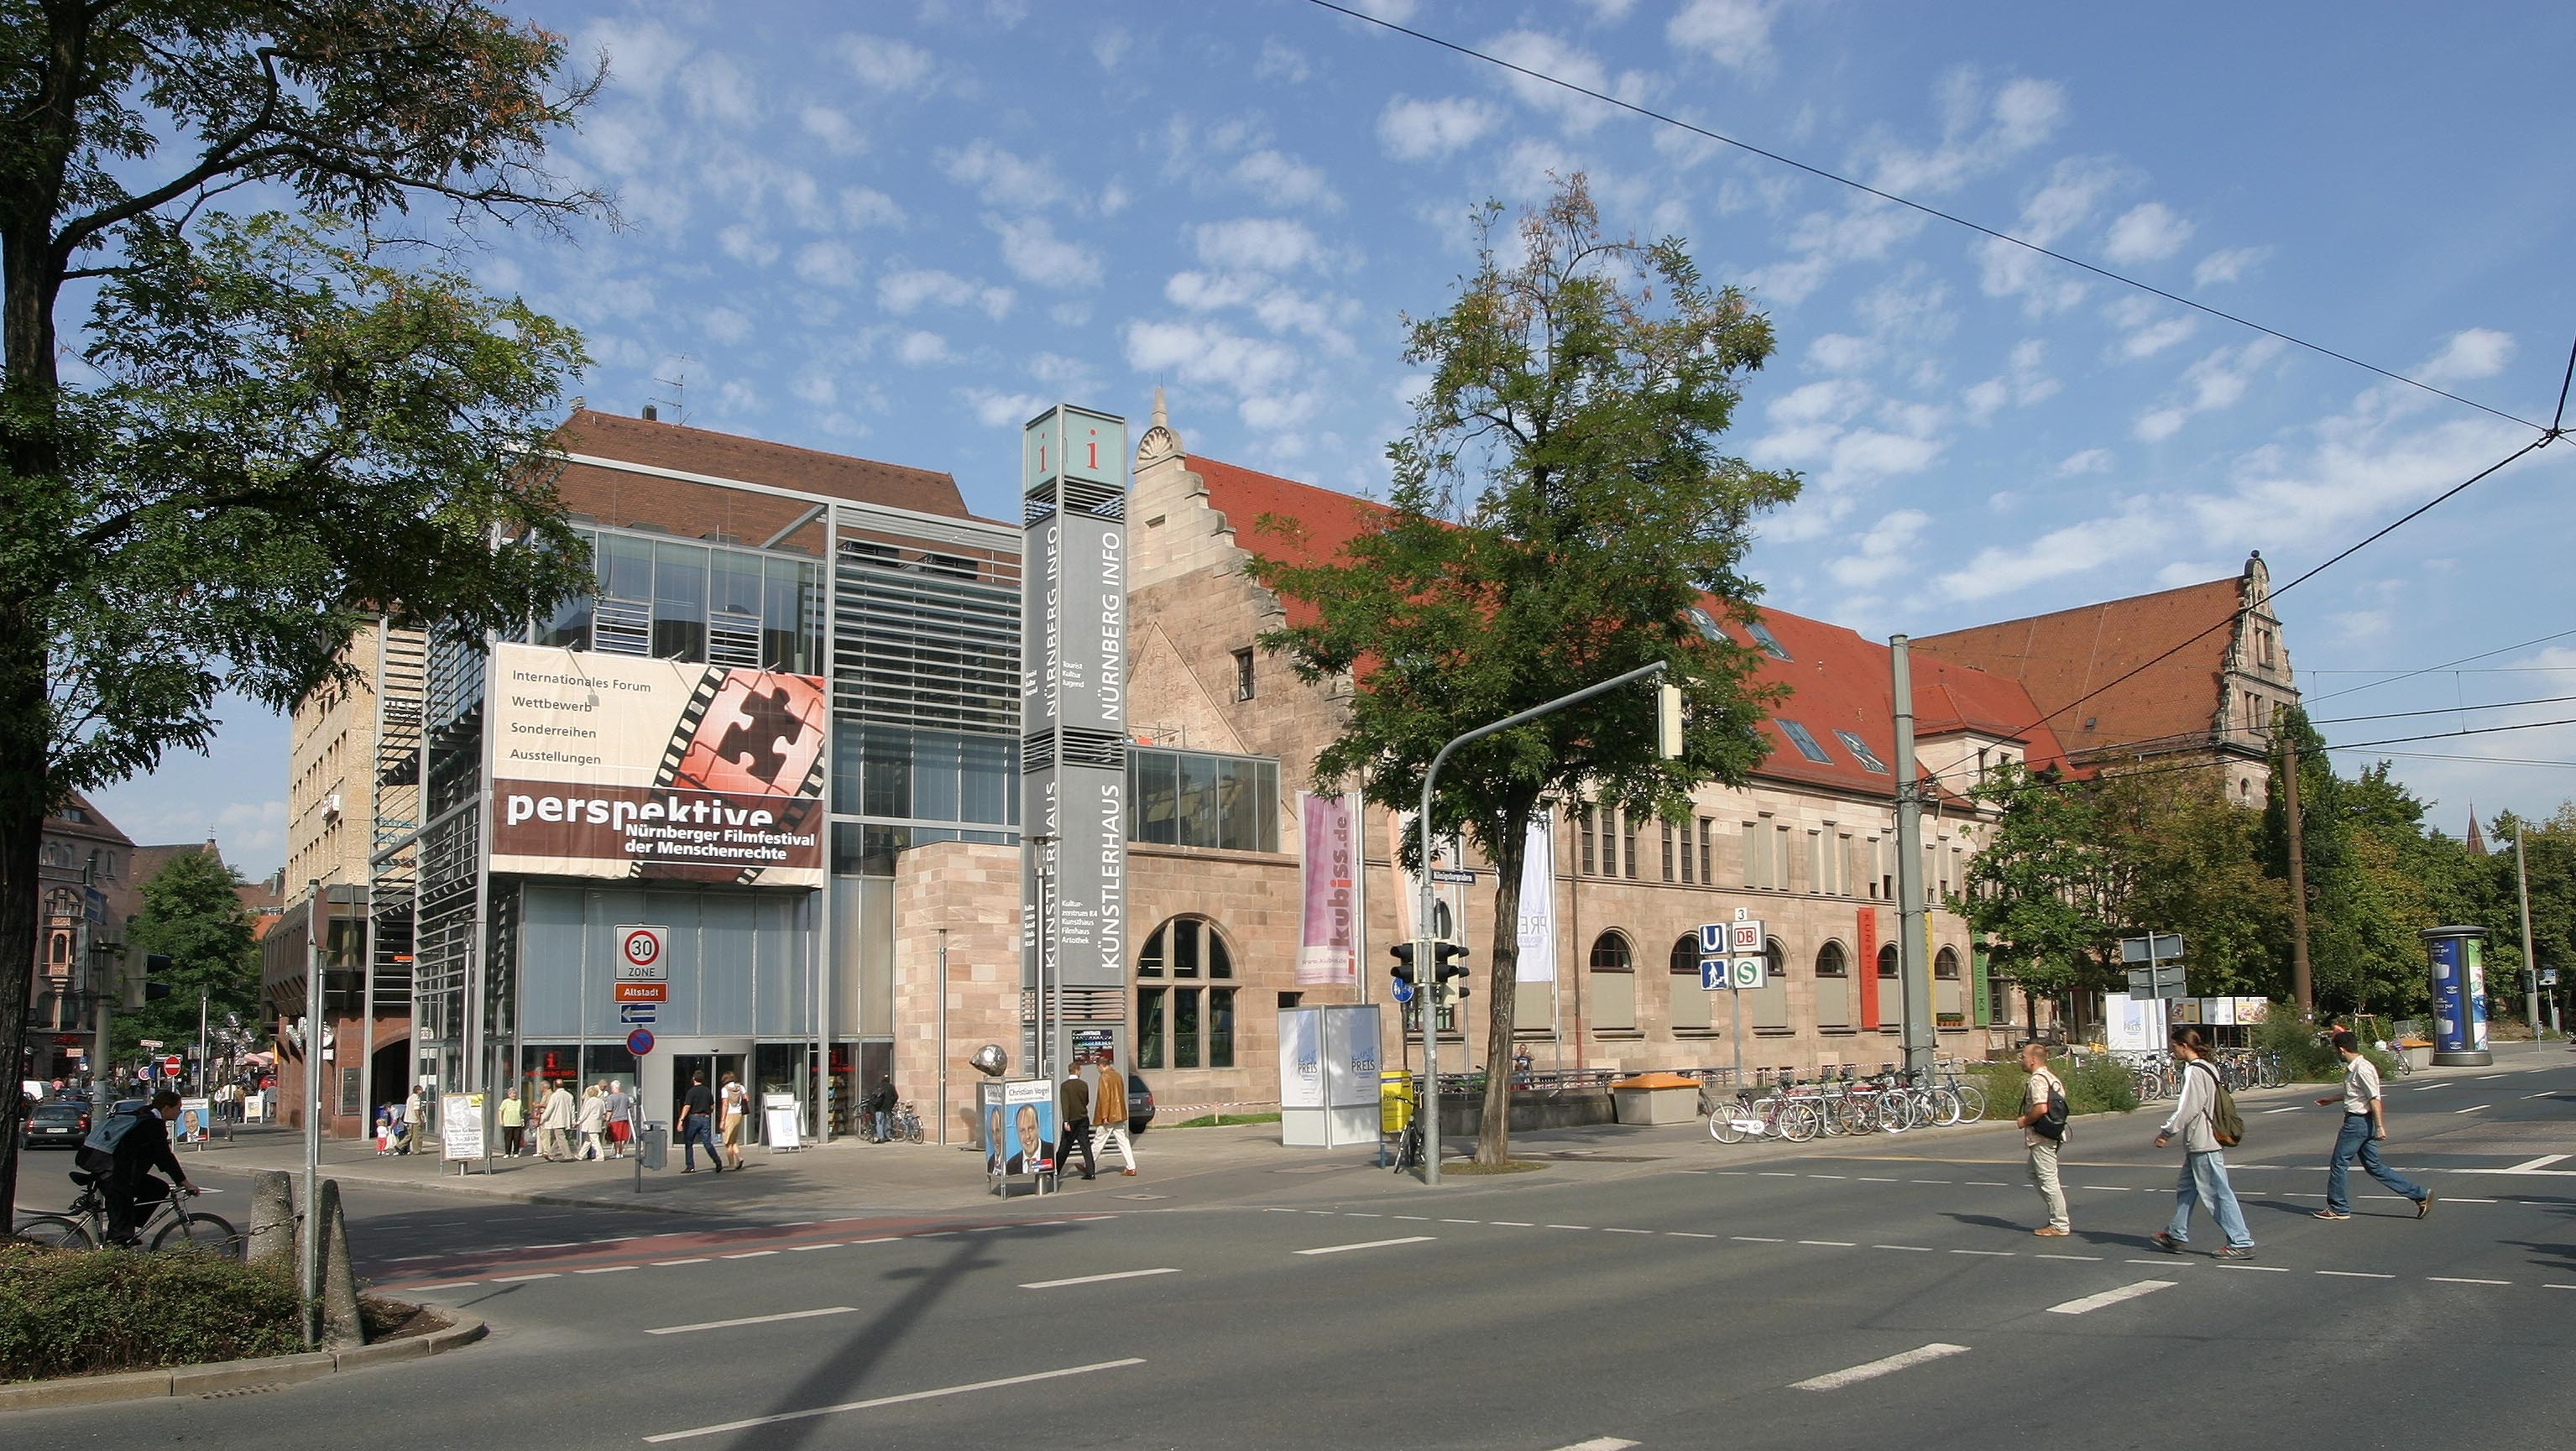 Filmhaus Nürnberg